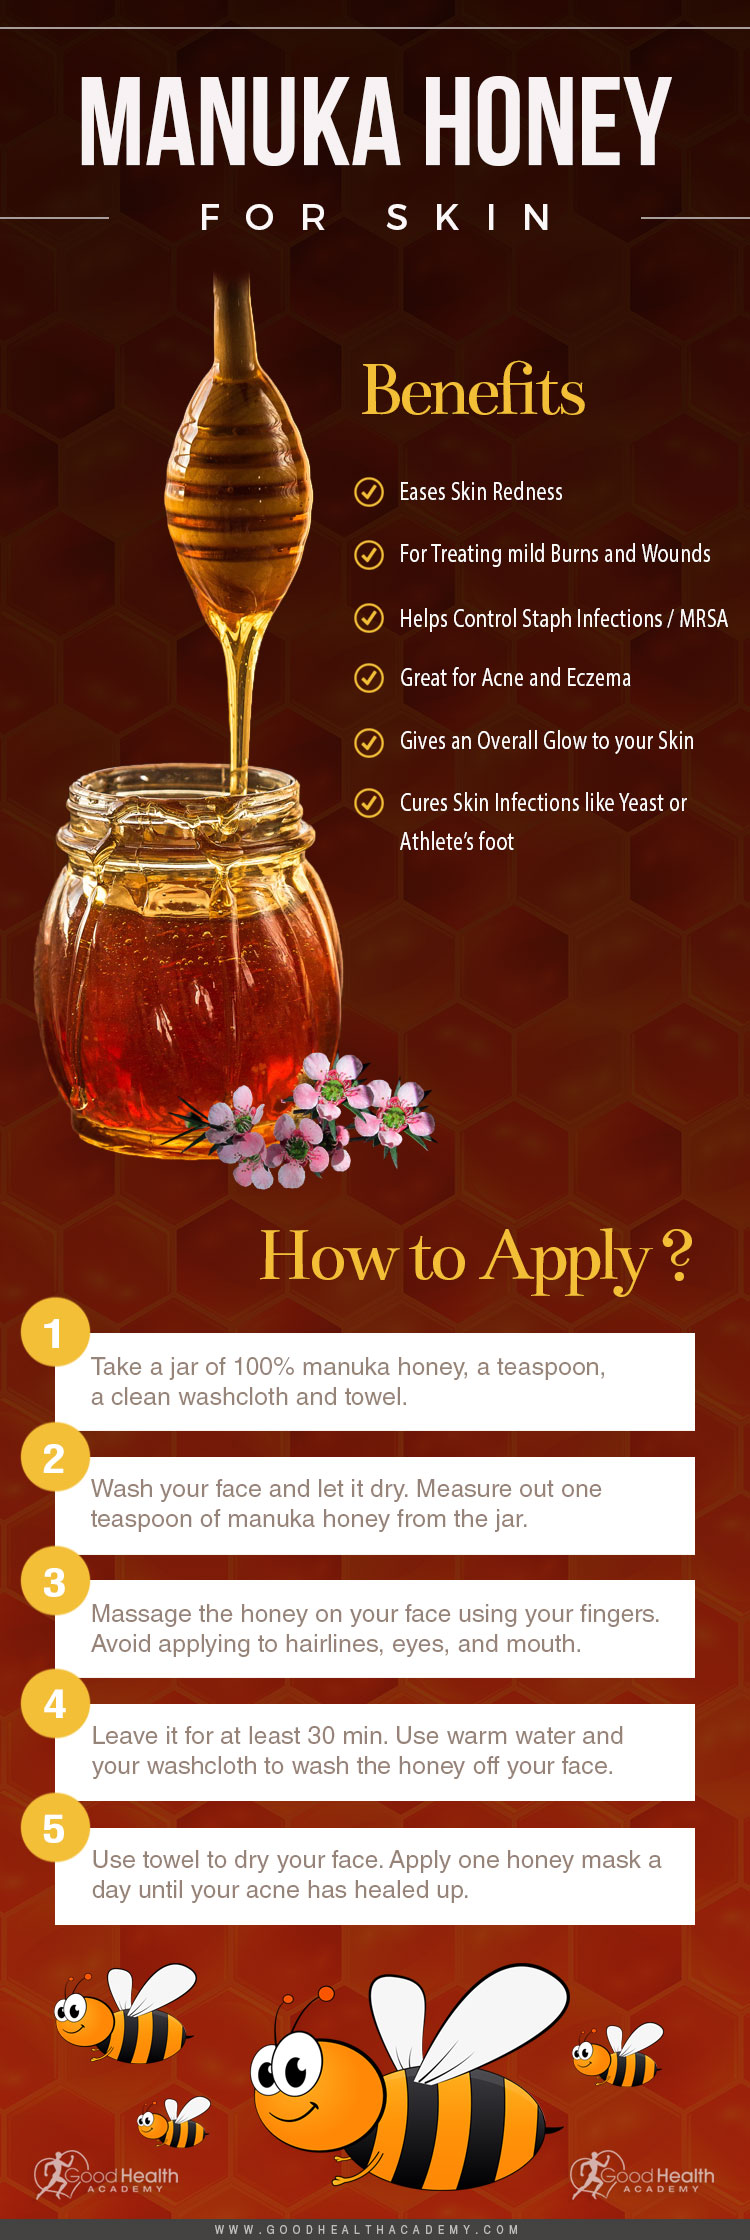 infographic manuka honey benefits and how to use